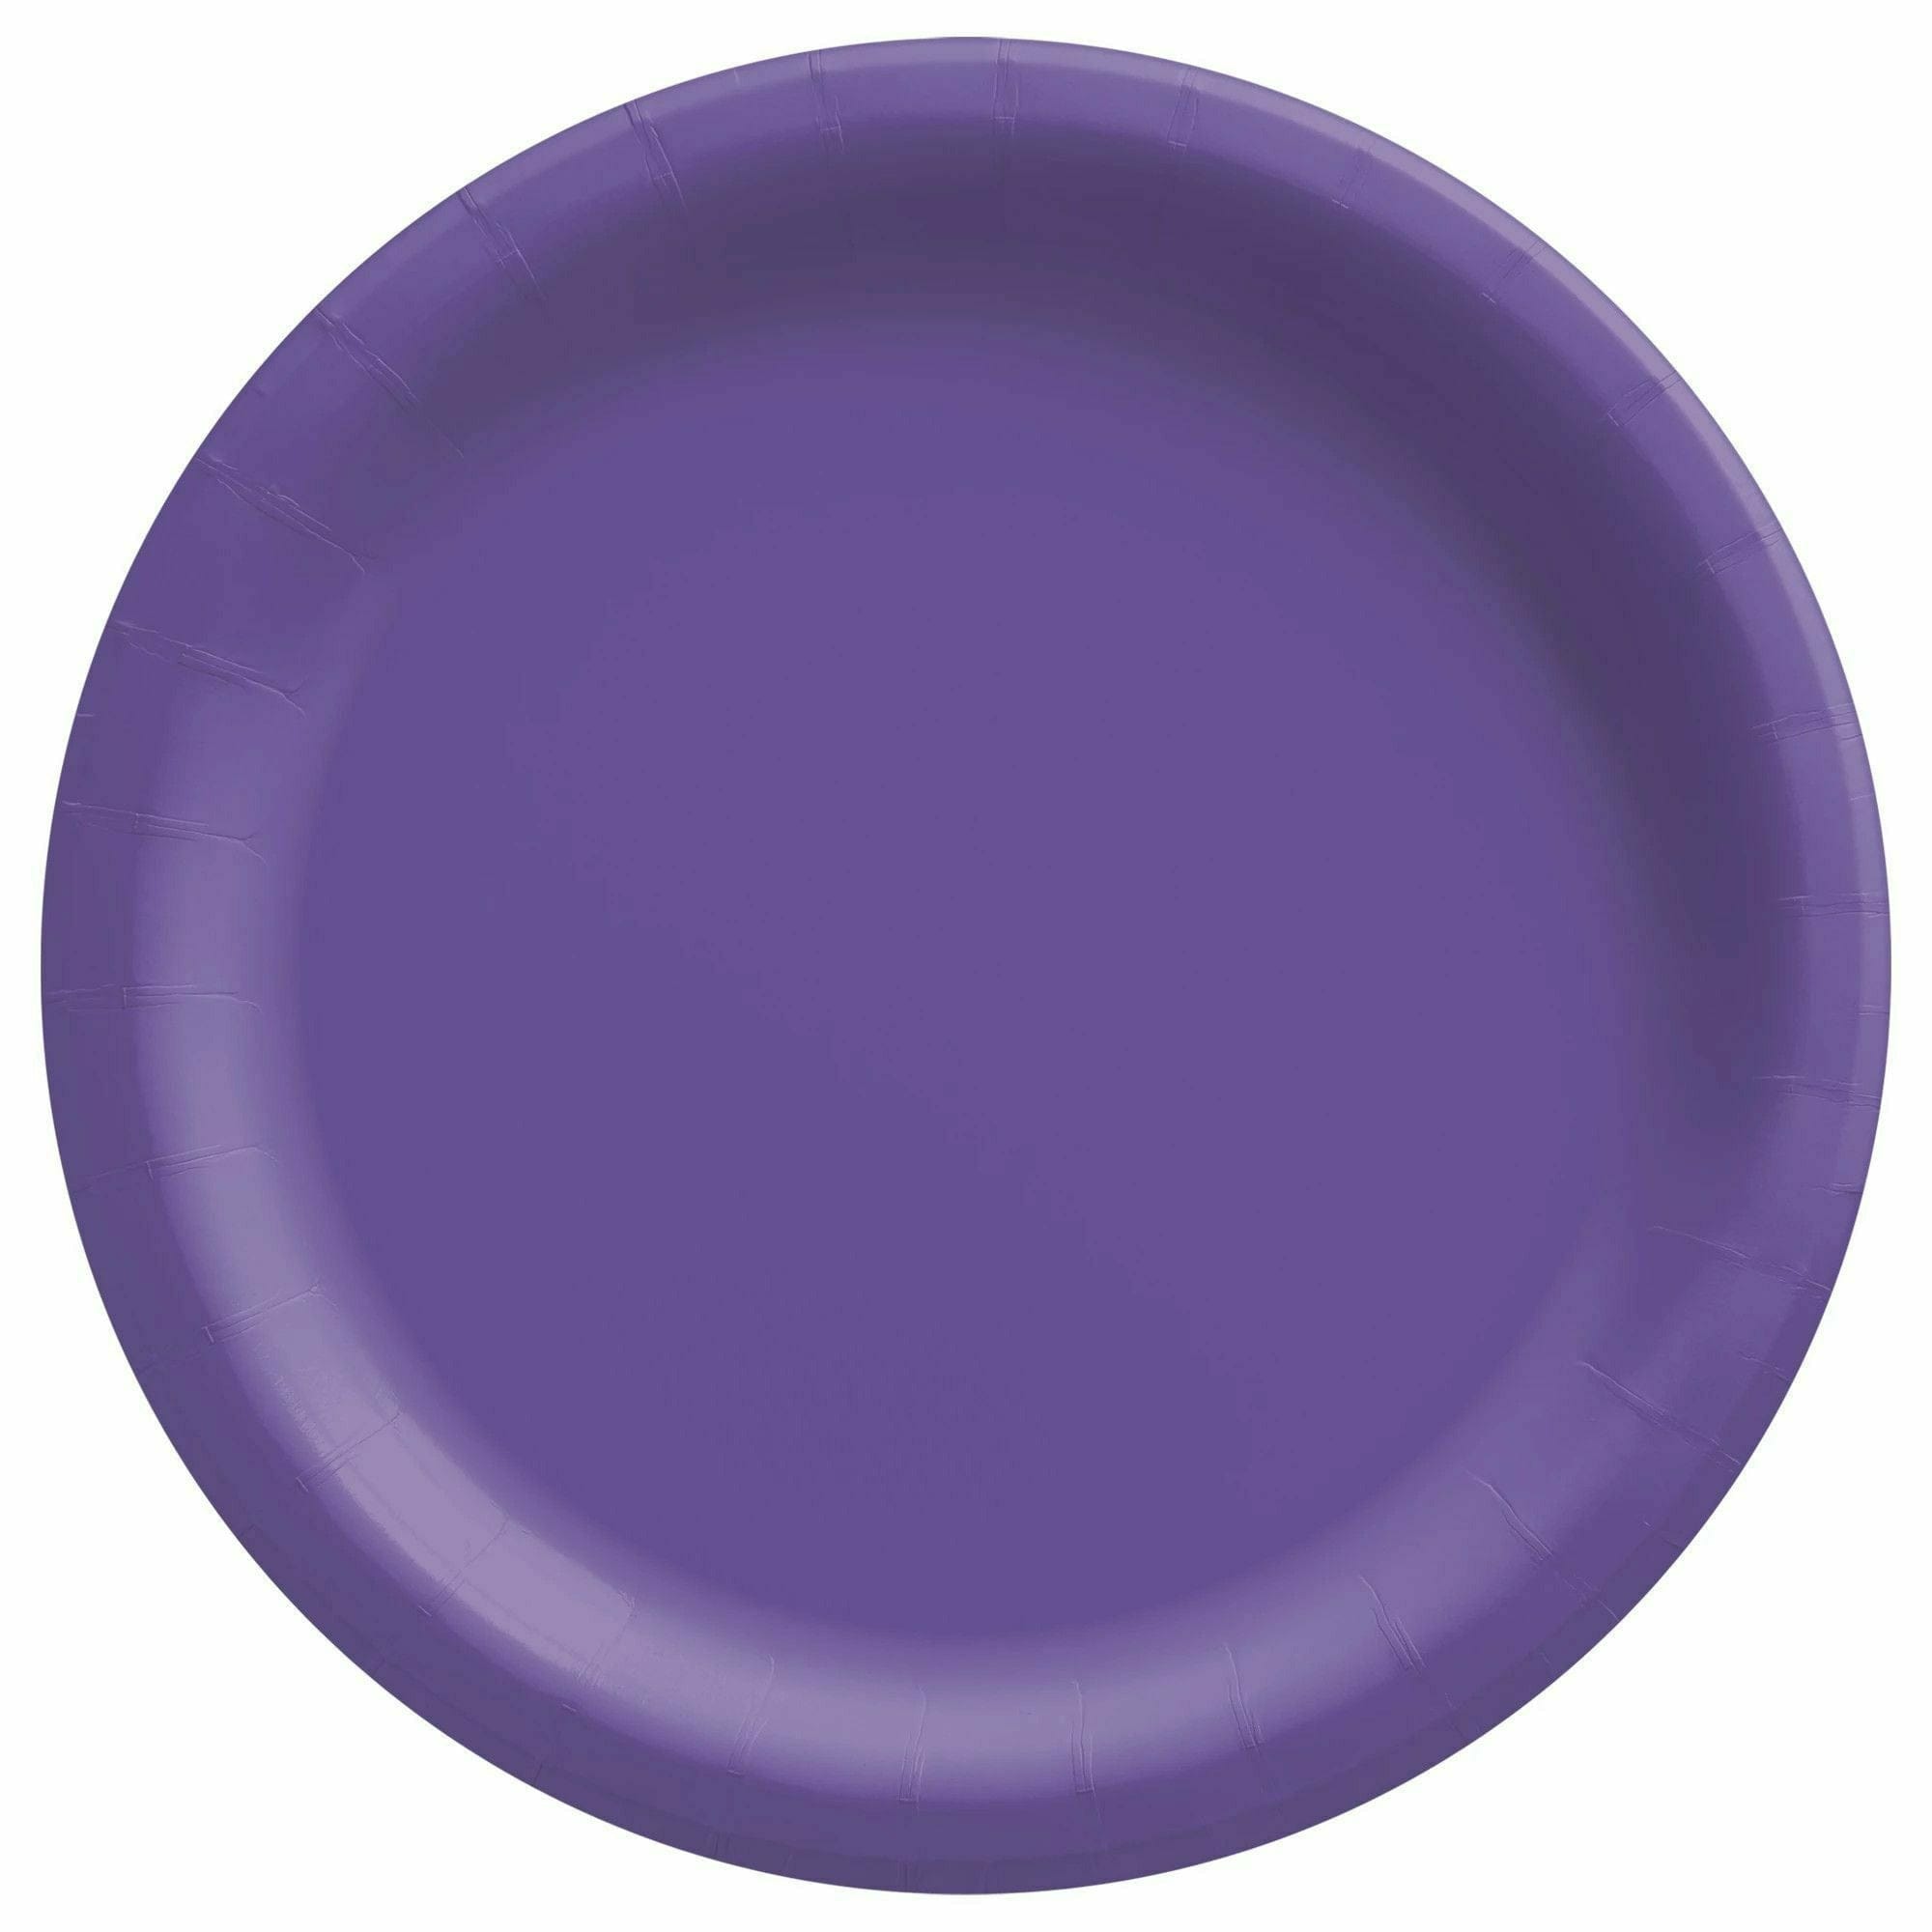 Amscan BASIC Purple - 6 3/4" Round Paper Plates, 20 Ct.